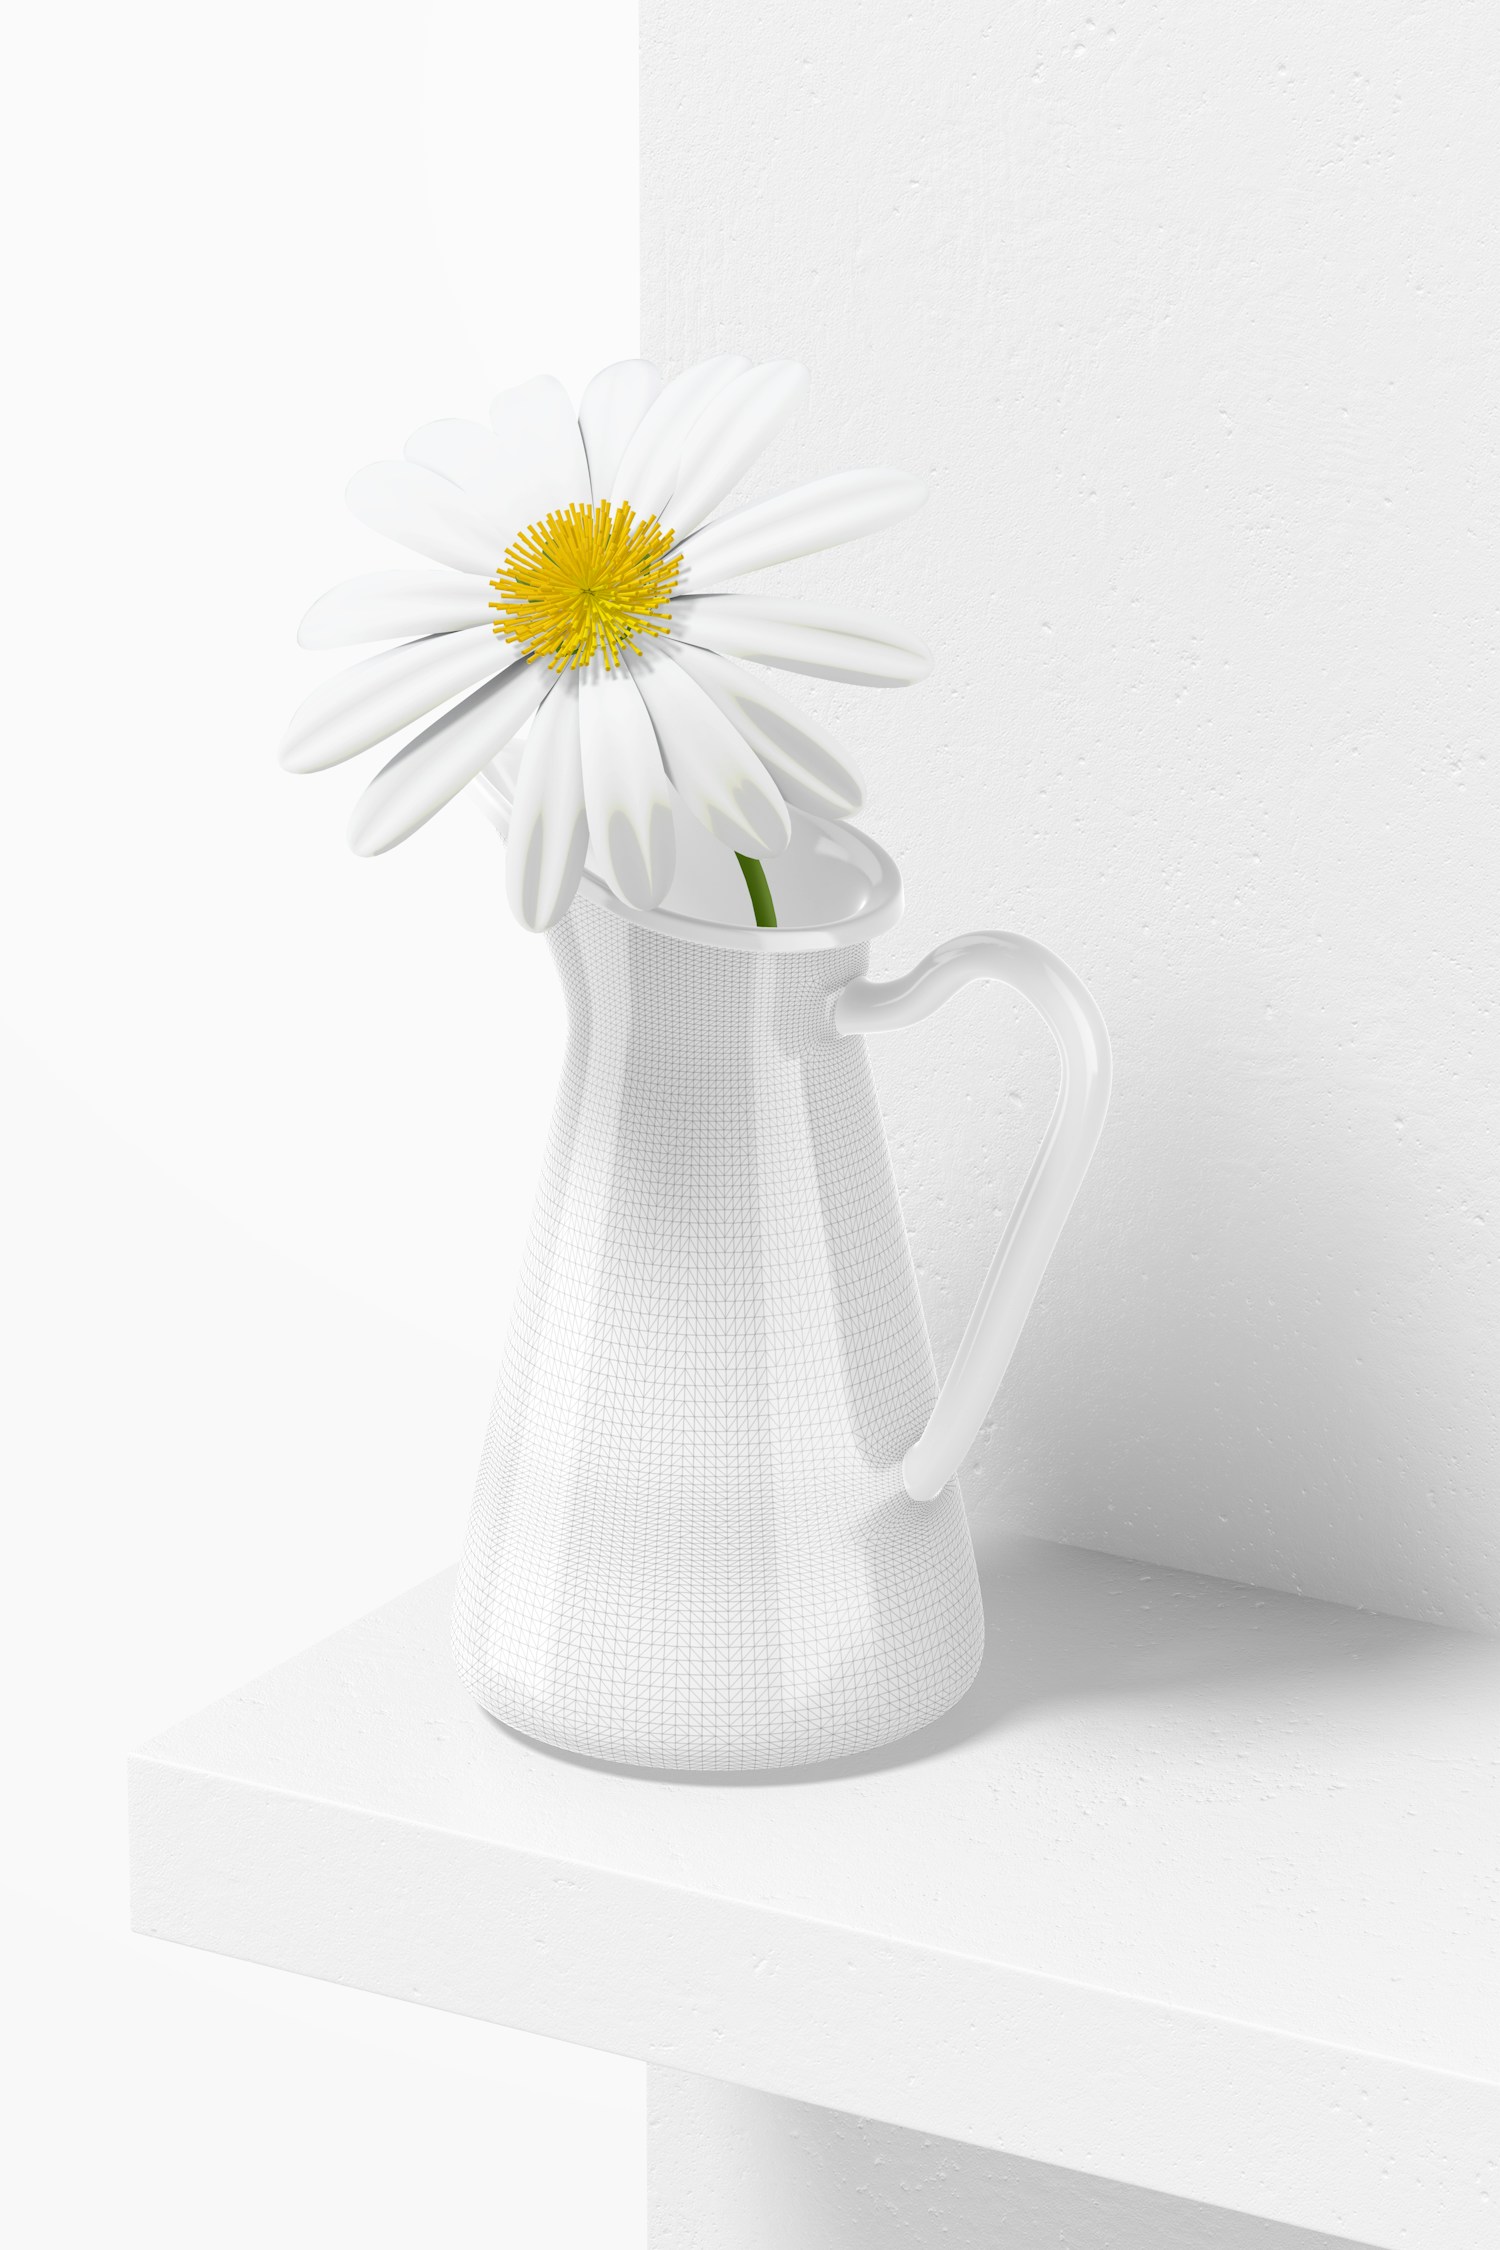 Steel Flower Vase Mockup